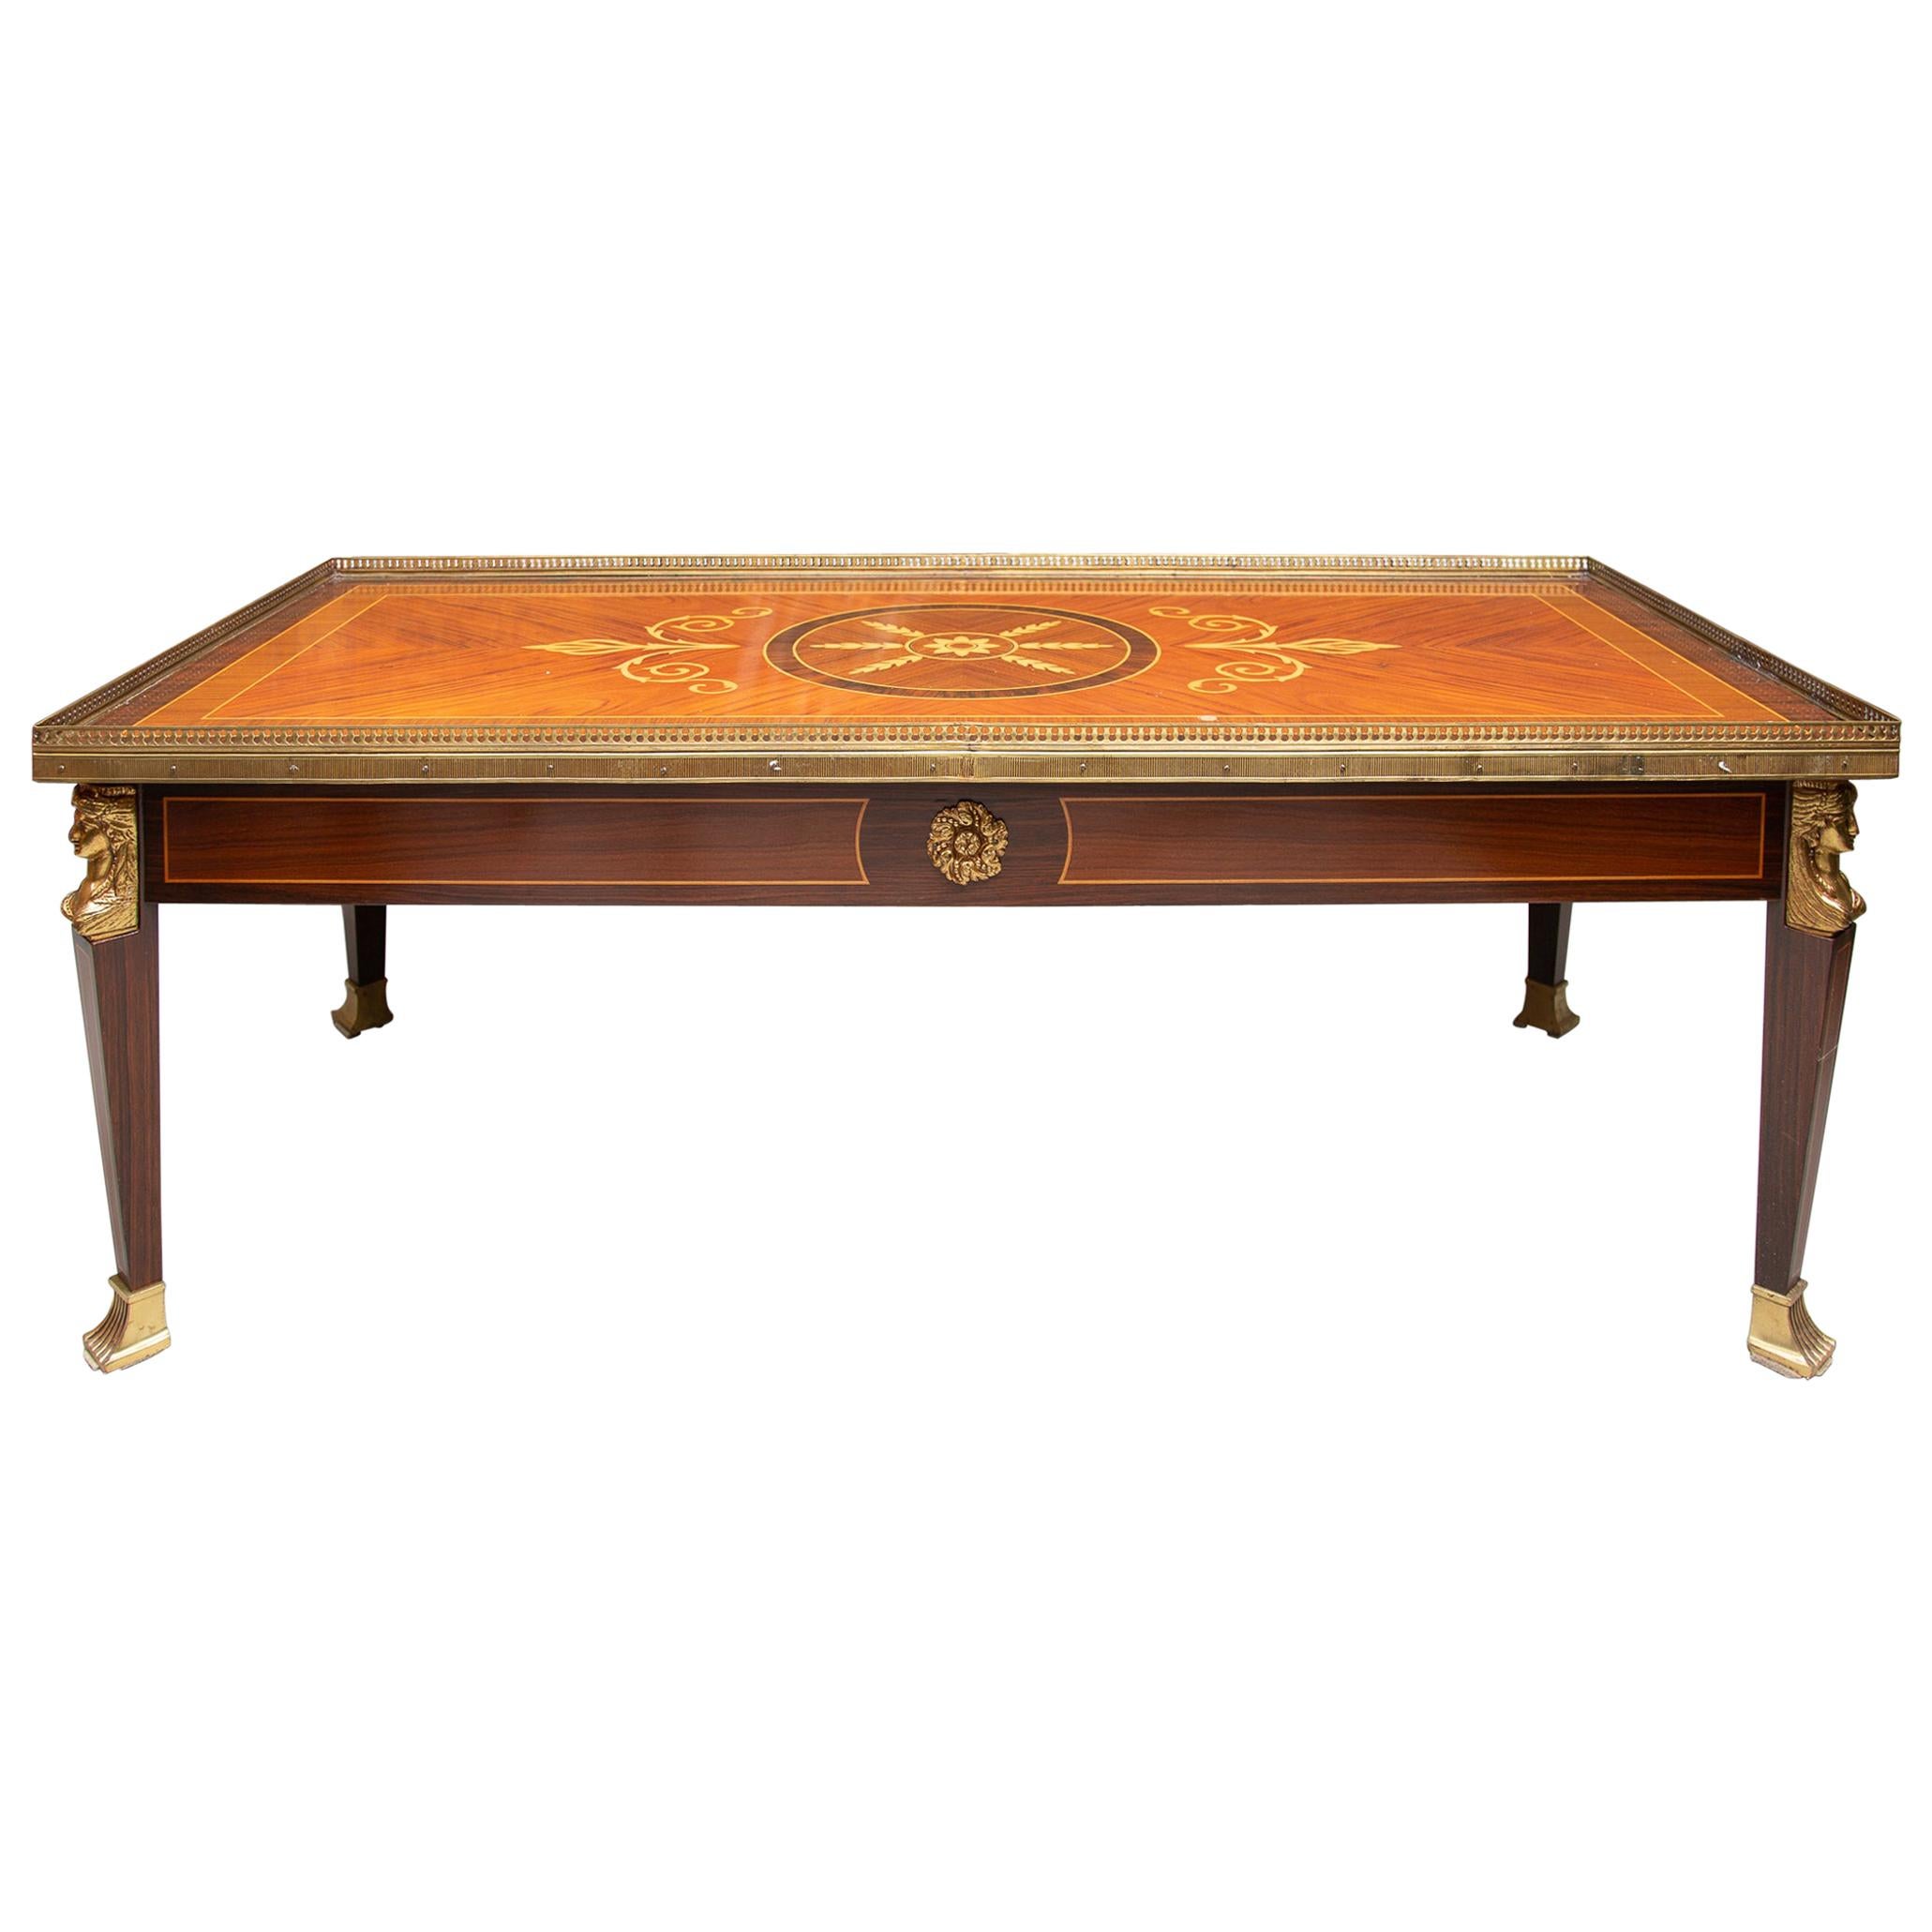 Louis XVI Style Mahogany Inlaid Coffee Table